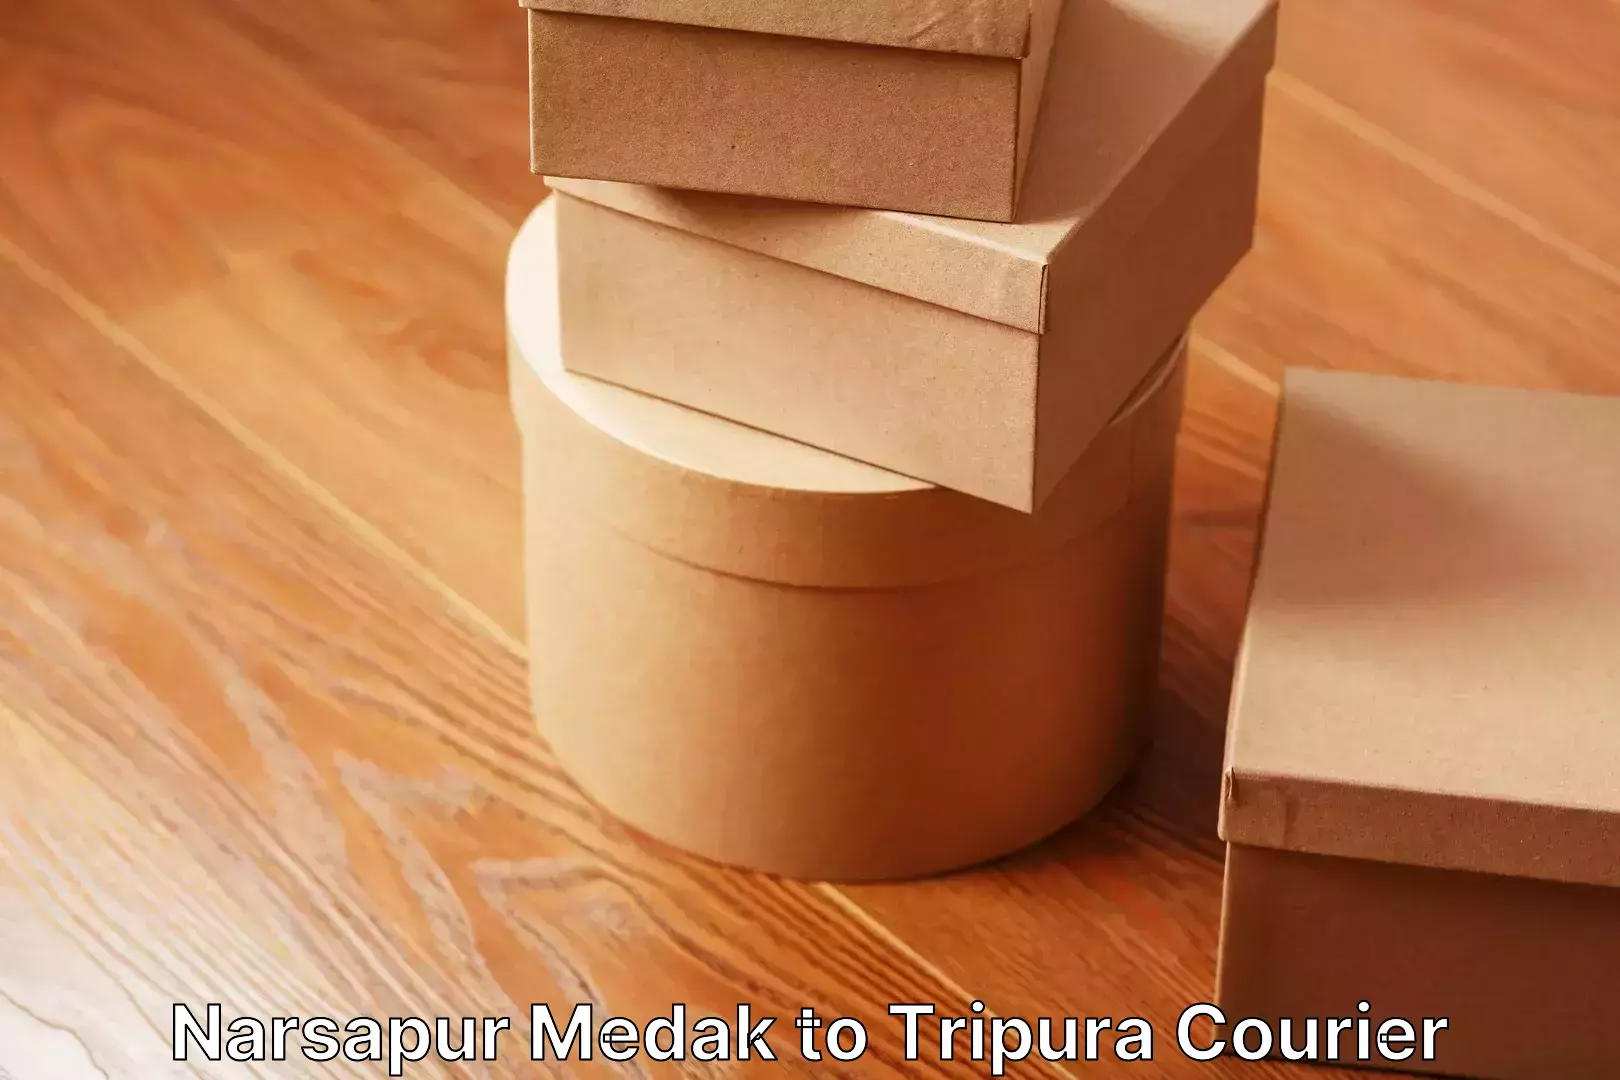 Furniture relocation experts Narsapur Medak to Tripura